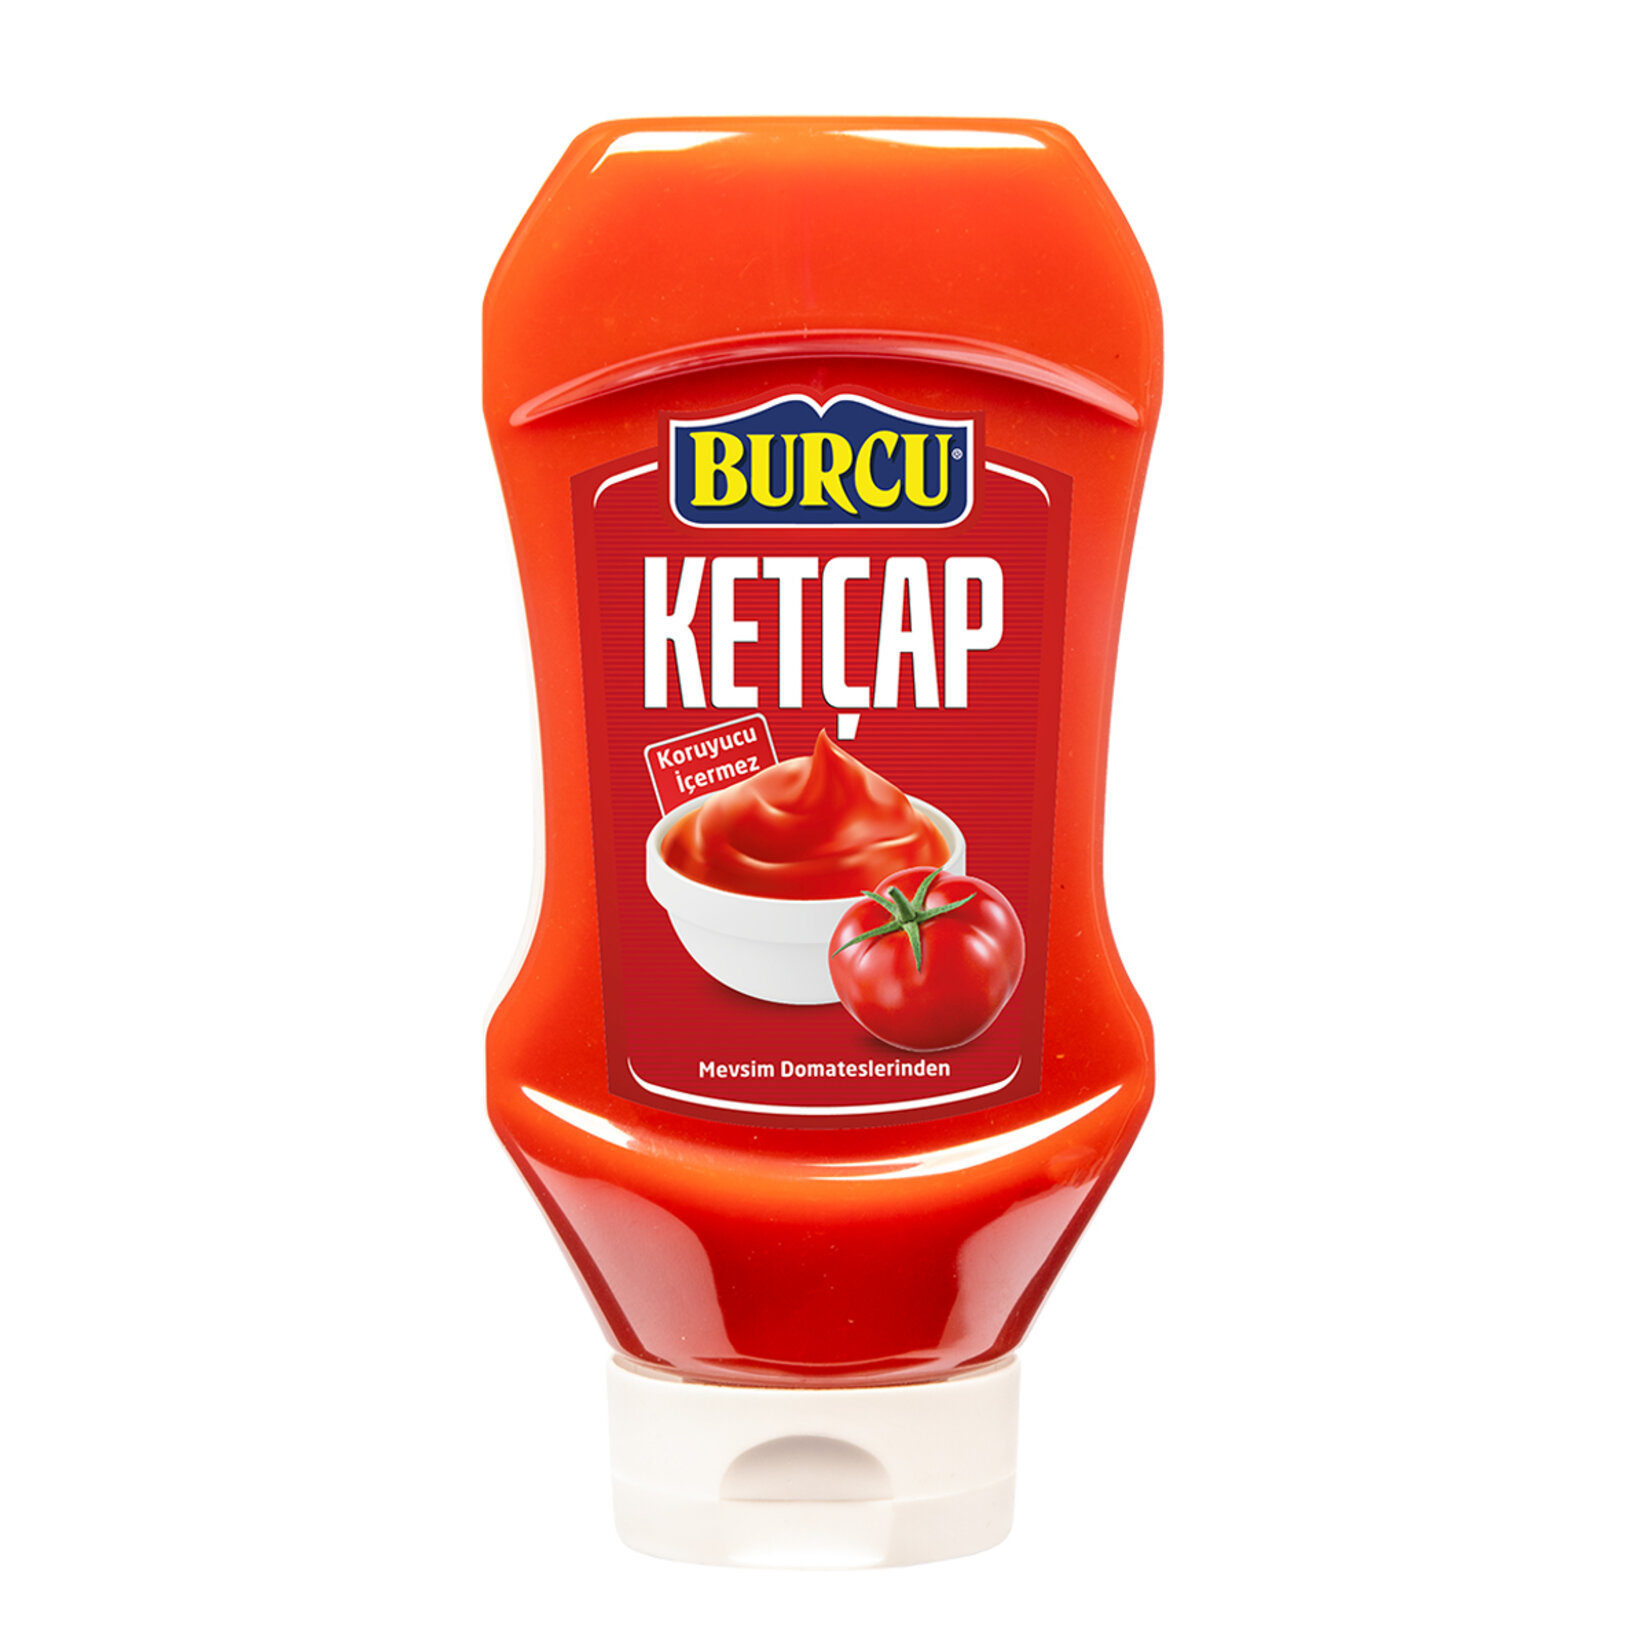 Ketchup (Sweet)/Ketcap (Burcu)